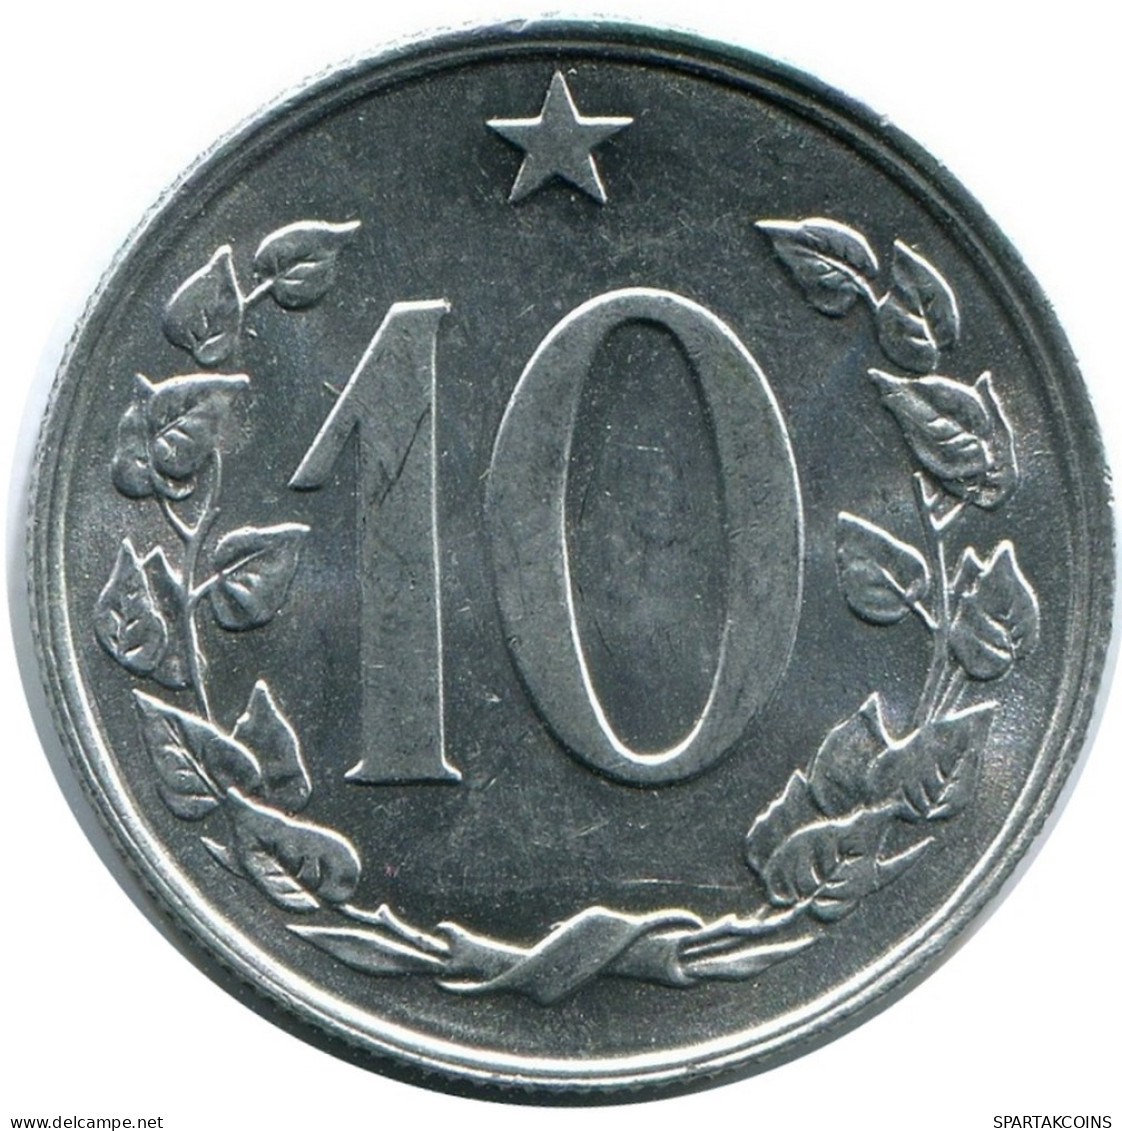 10 HALERU 1969 CZECHOSLOVAKIA Coin #AR224.U.A - Czechoslovakia